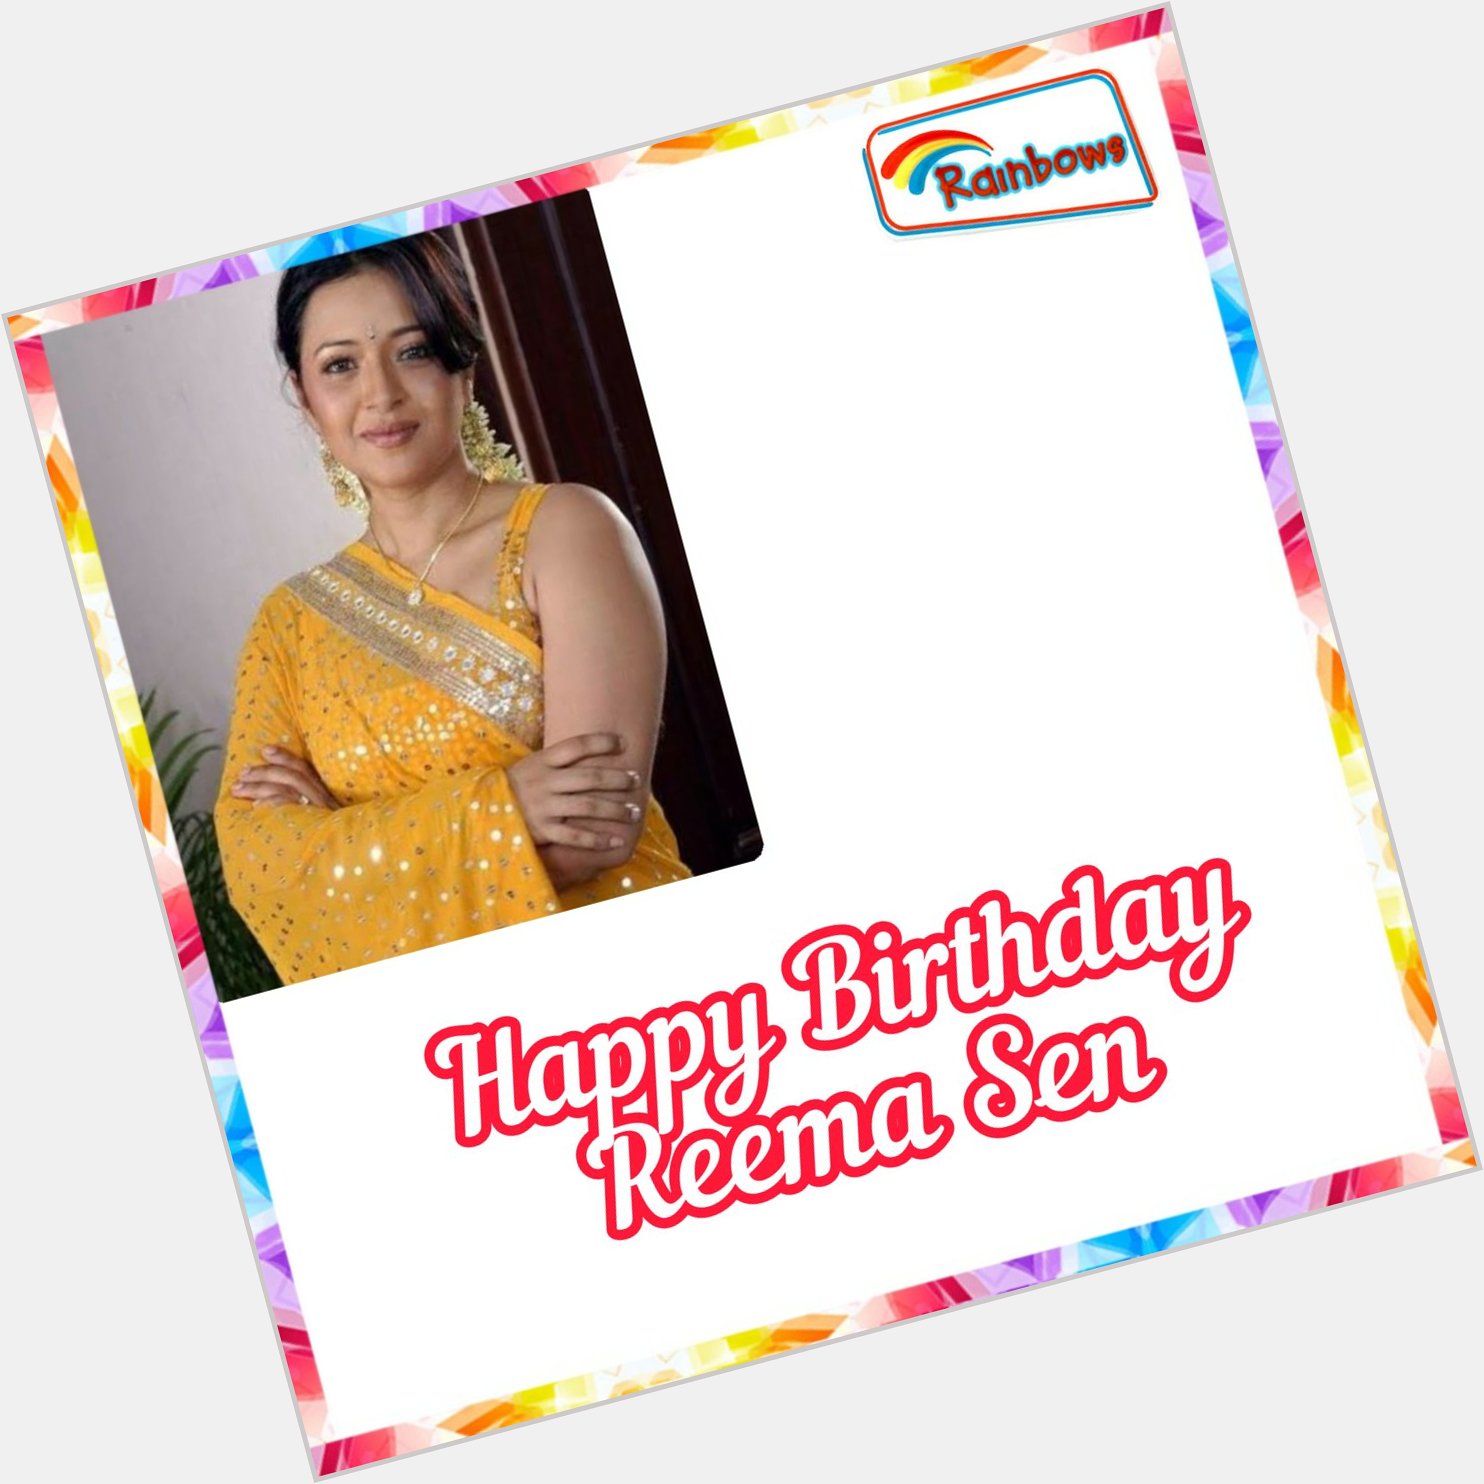 Happy Birthday Reema Sen  